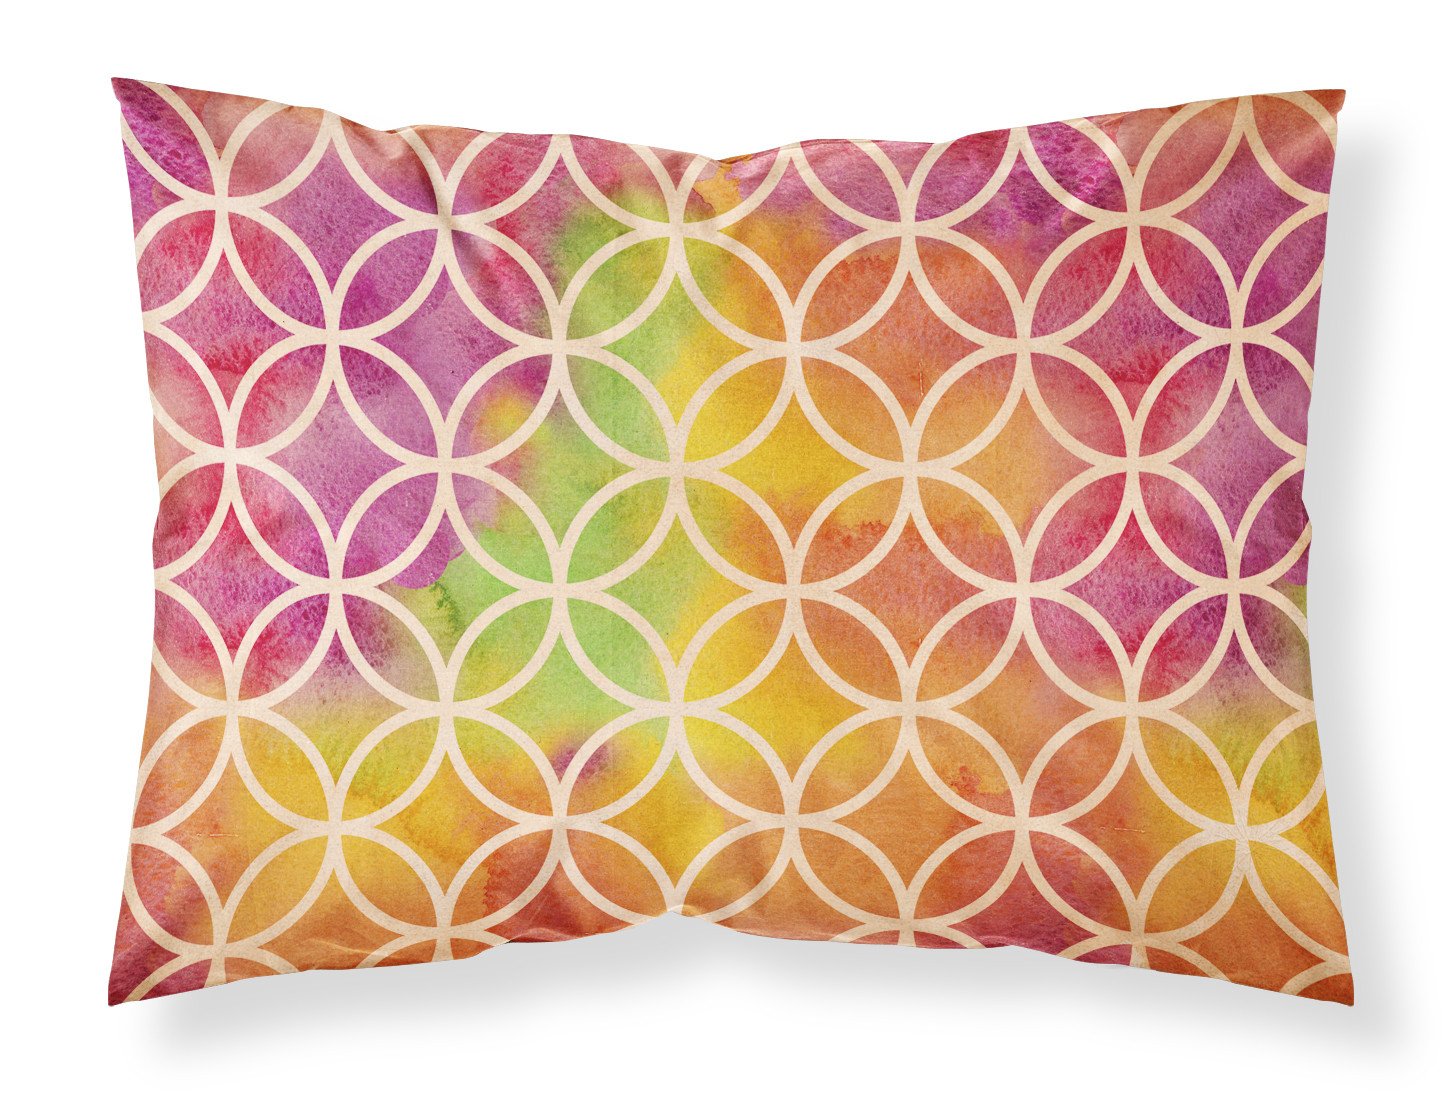 Watercolor Rainbow Geometric Circles Fabric Standard Pillowcase BB7515PILLOWCASE by Caroline's Treasures